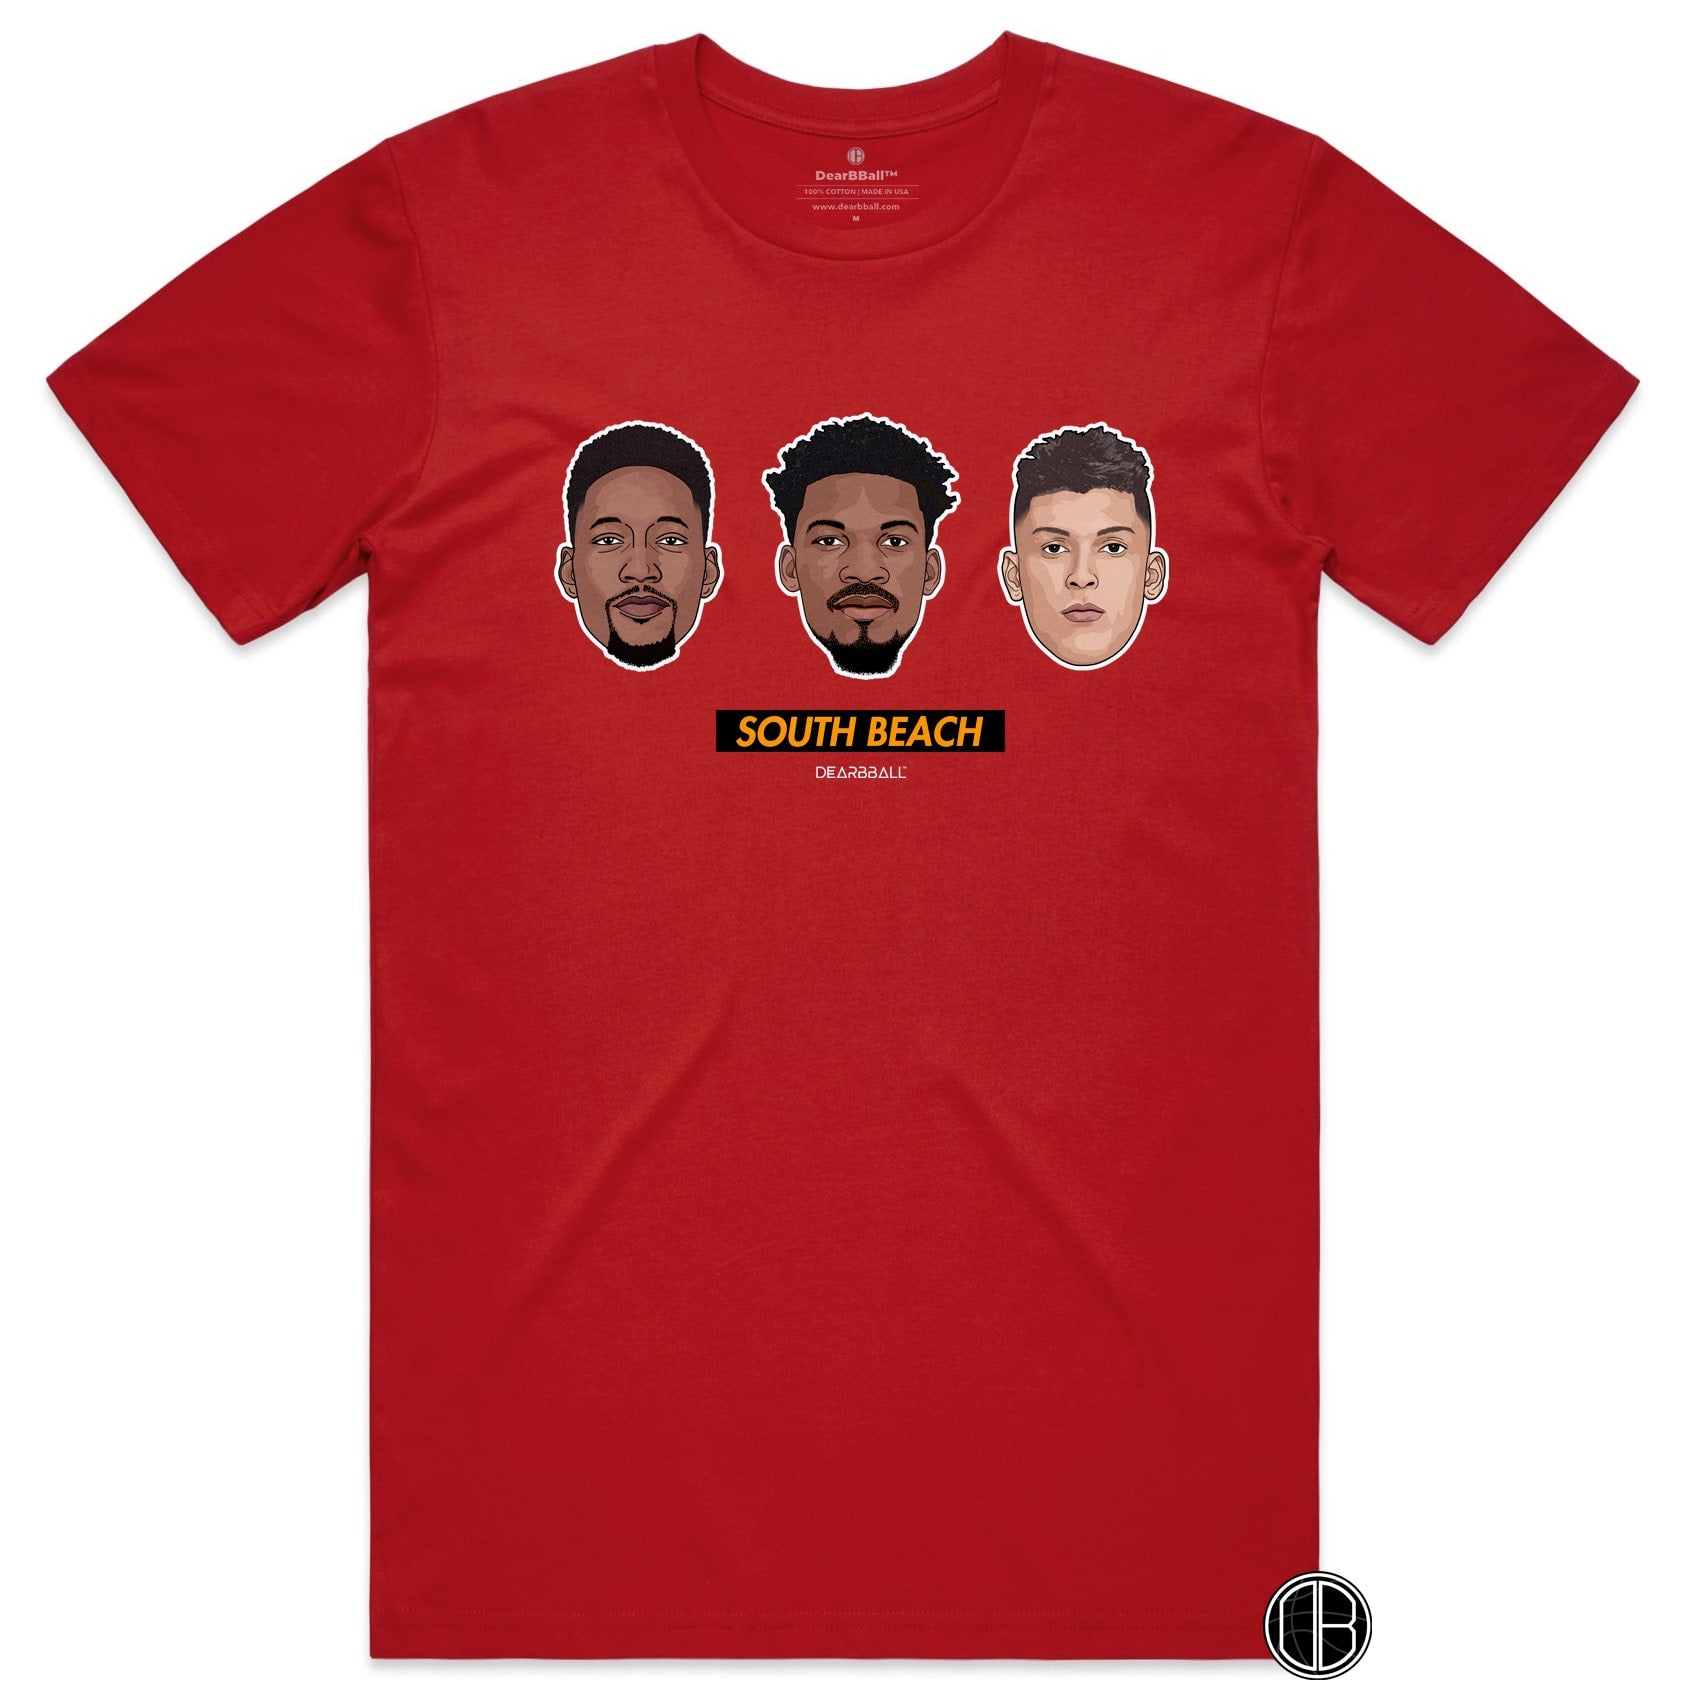 South-Beach-T-Shirt-Big-Three-Miami-Heat-Supremacy-Limited-Edition-Basketball-Dearbball